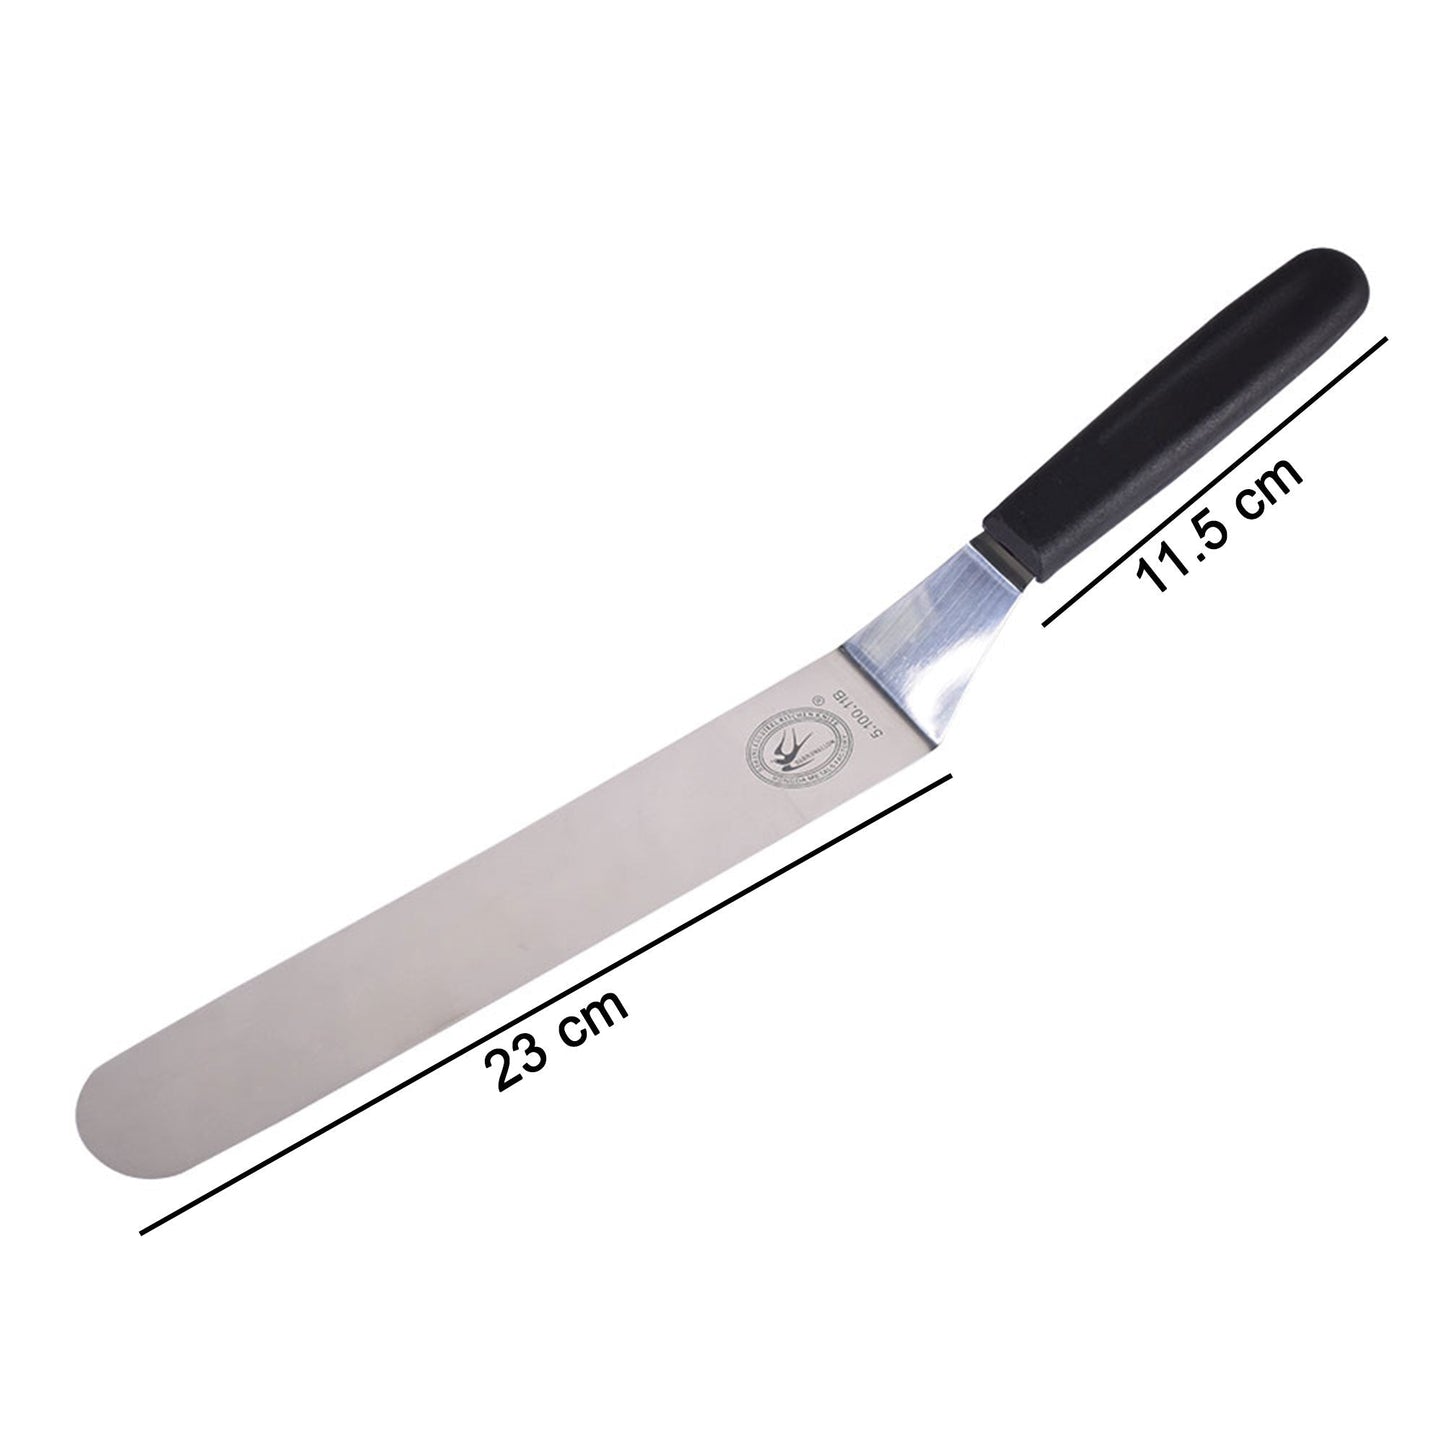 Barn Swallow Spatula Knife Stainless Steel Plastic Handle Medium